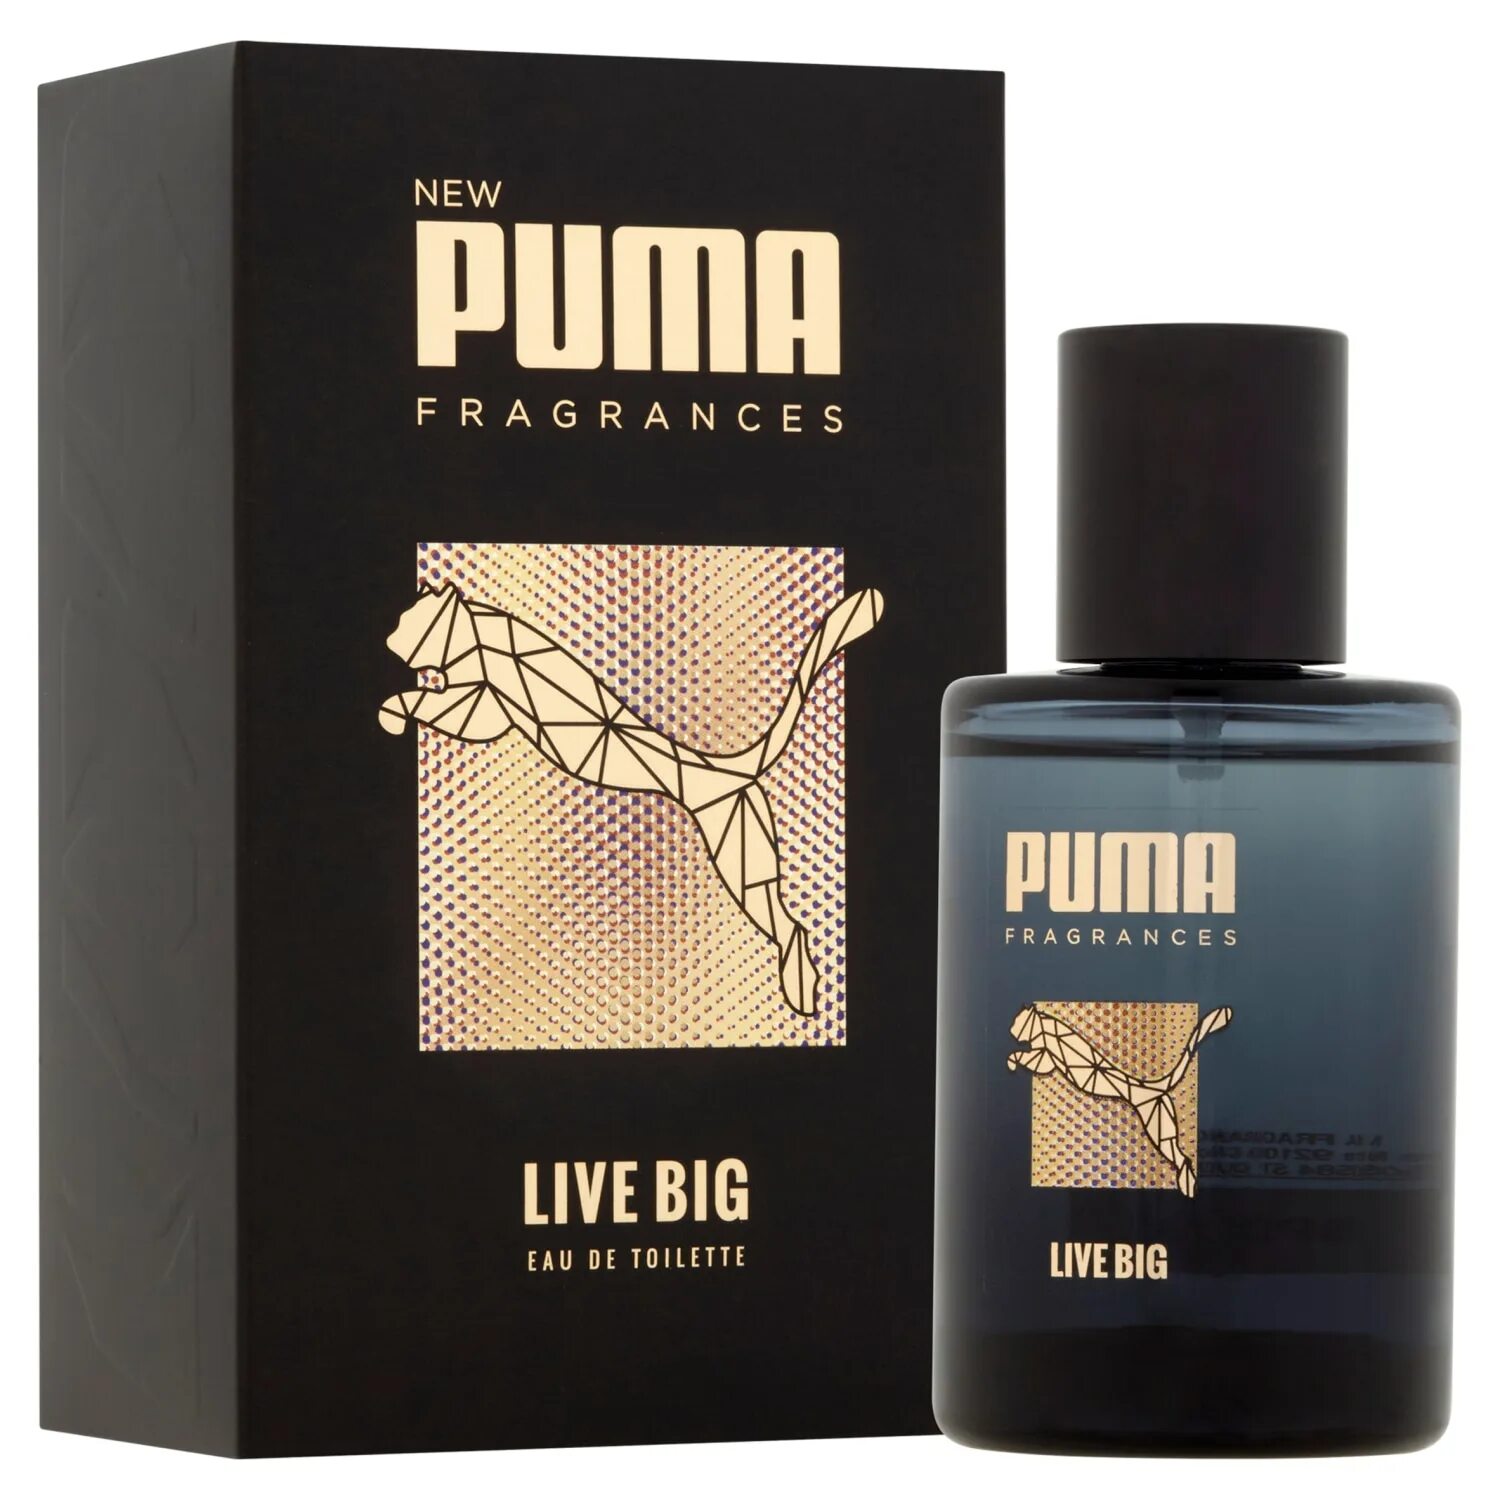 Духи Puma Live big. Аромат Пума для мужчин. Пума Блэк духи мужские. Puma туалетная вода мужская.